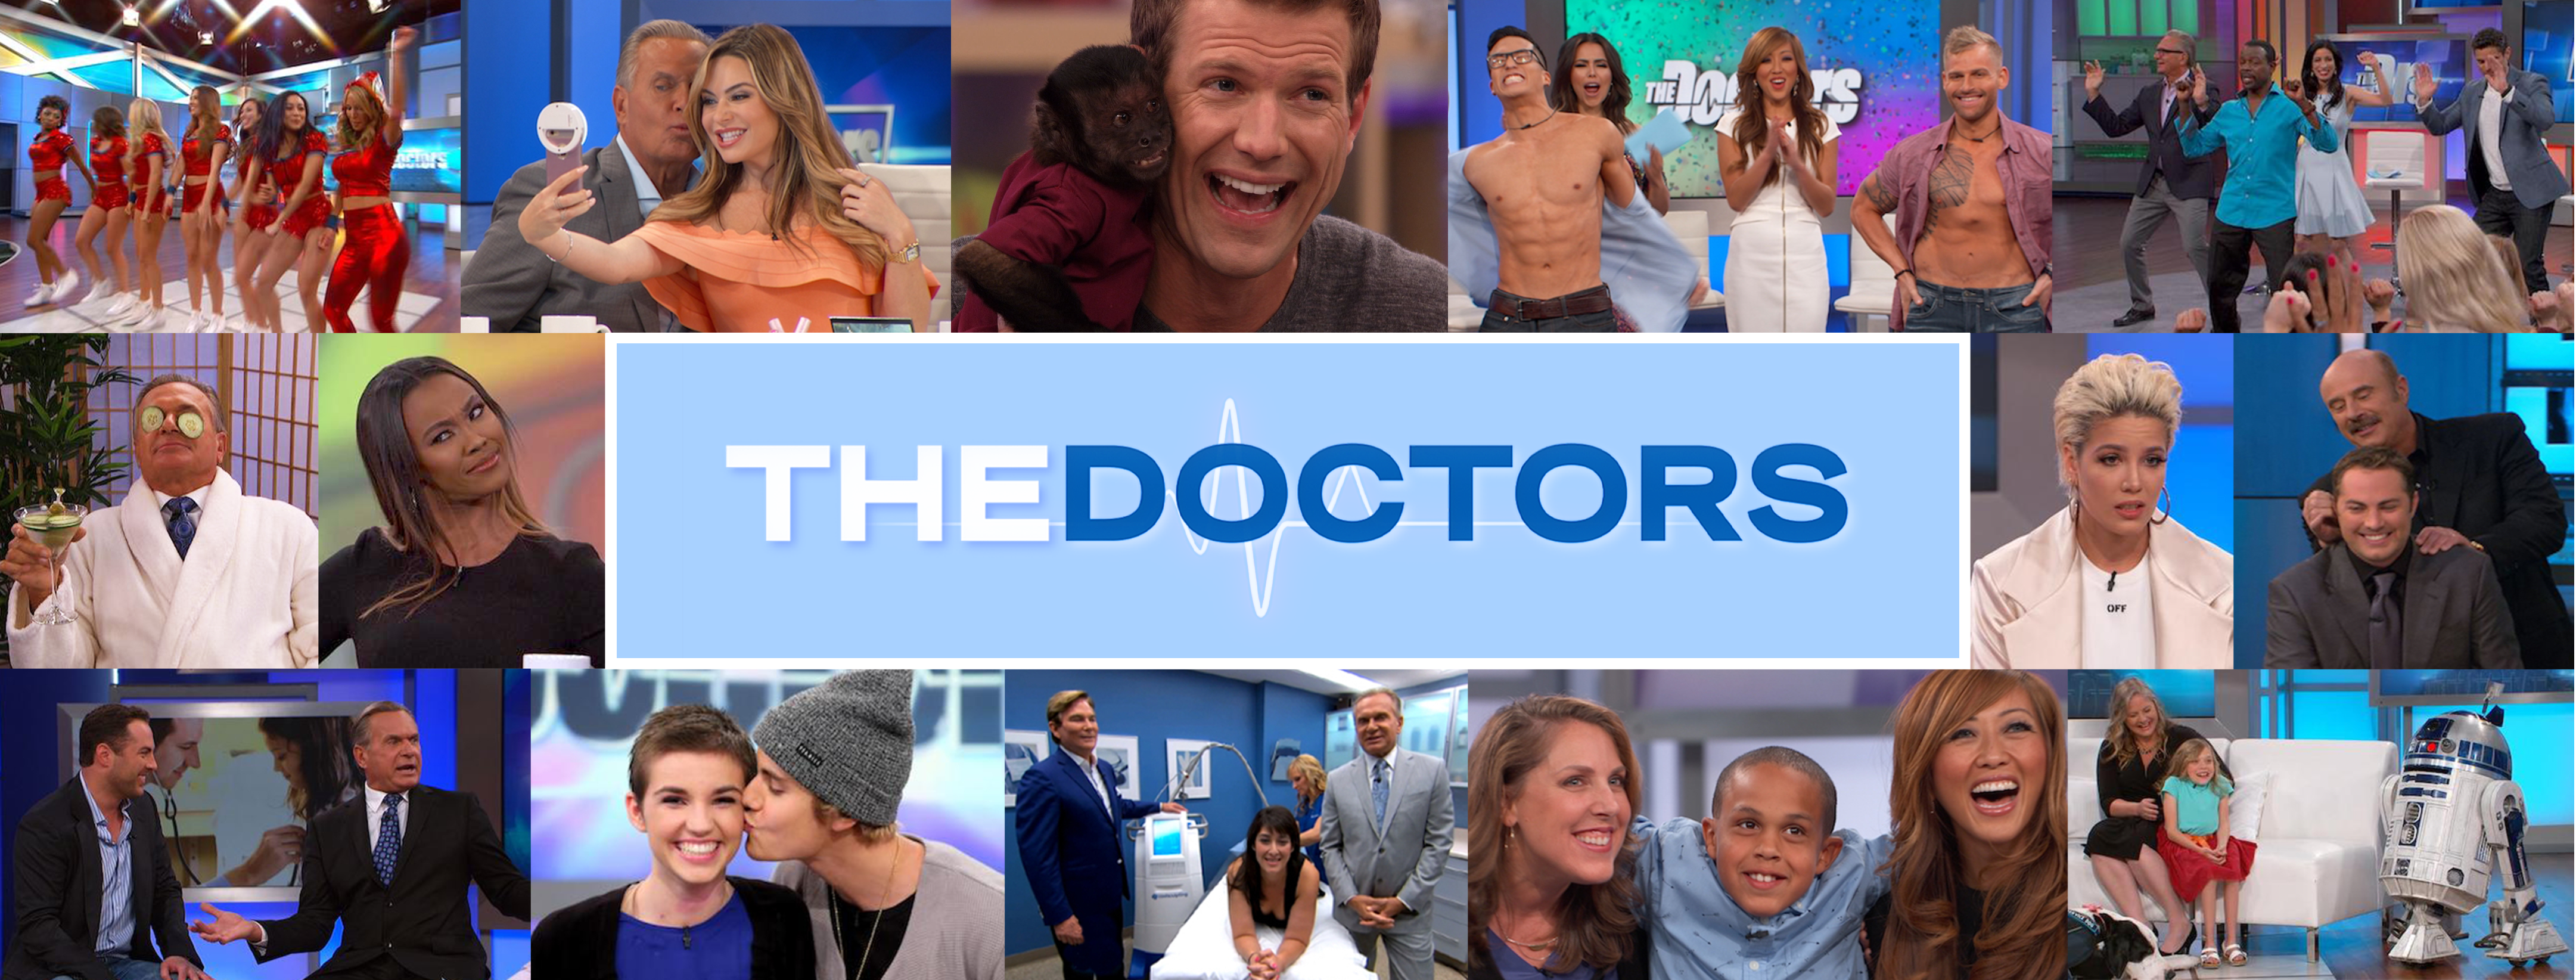 Deborah Norville's Egg White Facial | The Doctors TV Show